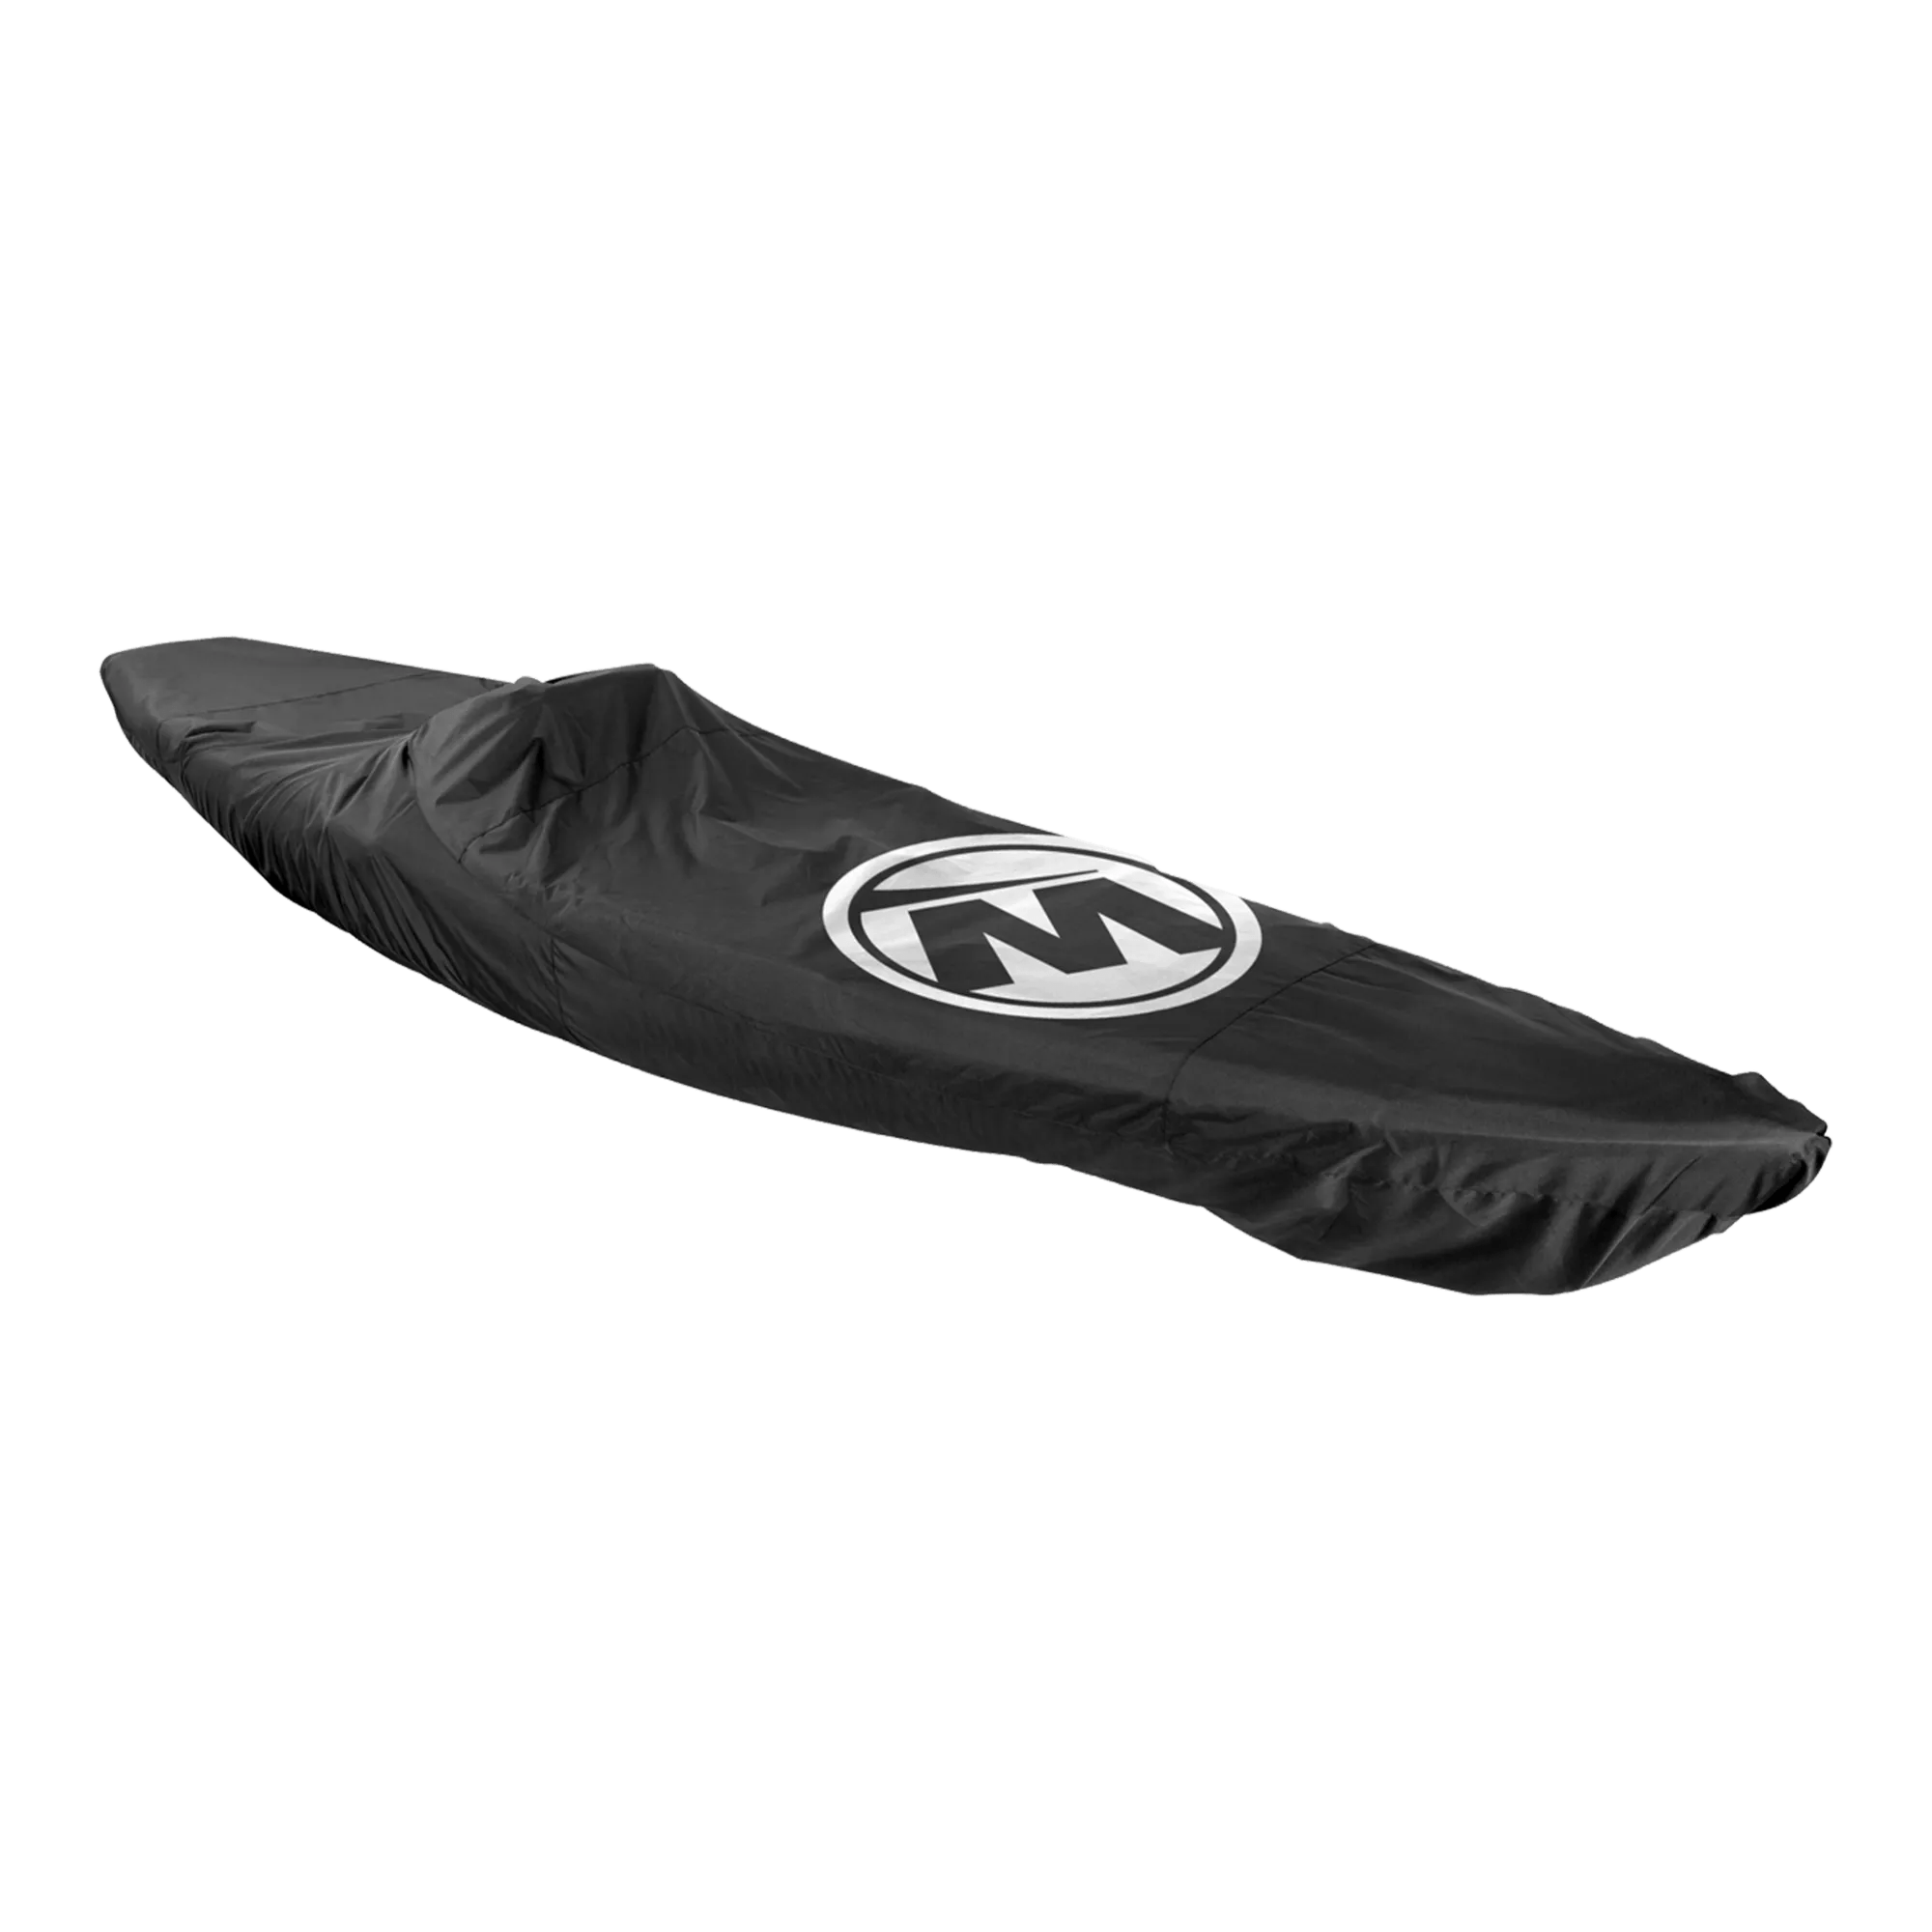 WILDERNESS SYSTEMS - Housse résistante pour les kayaks ouverts – XS - Black - 8070230 - ISO 